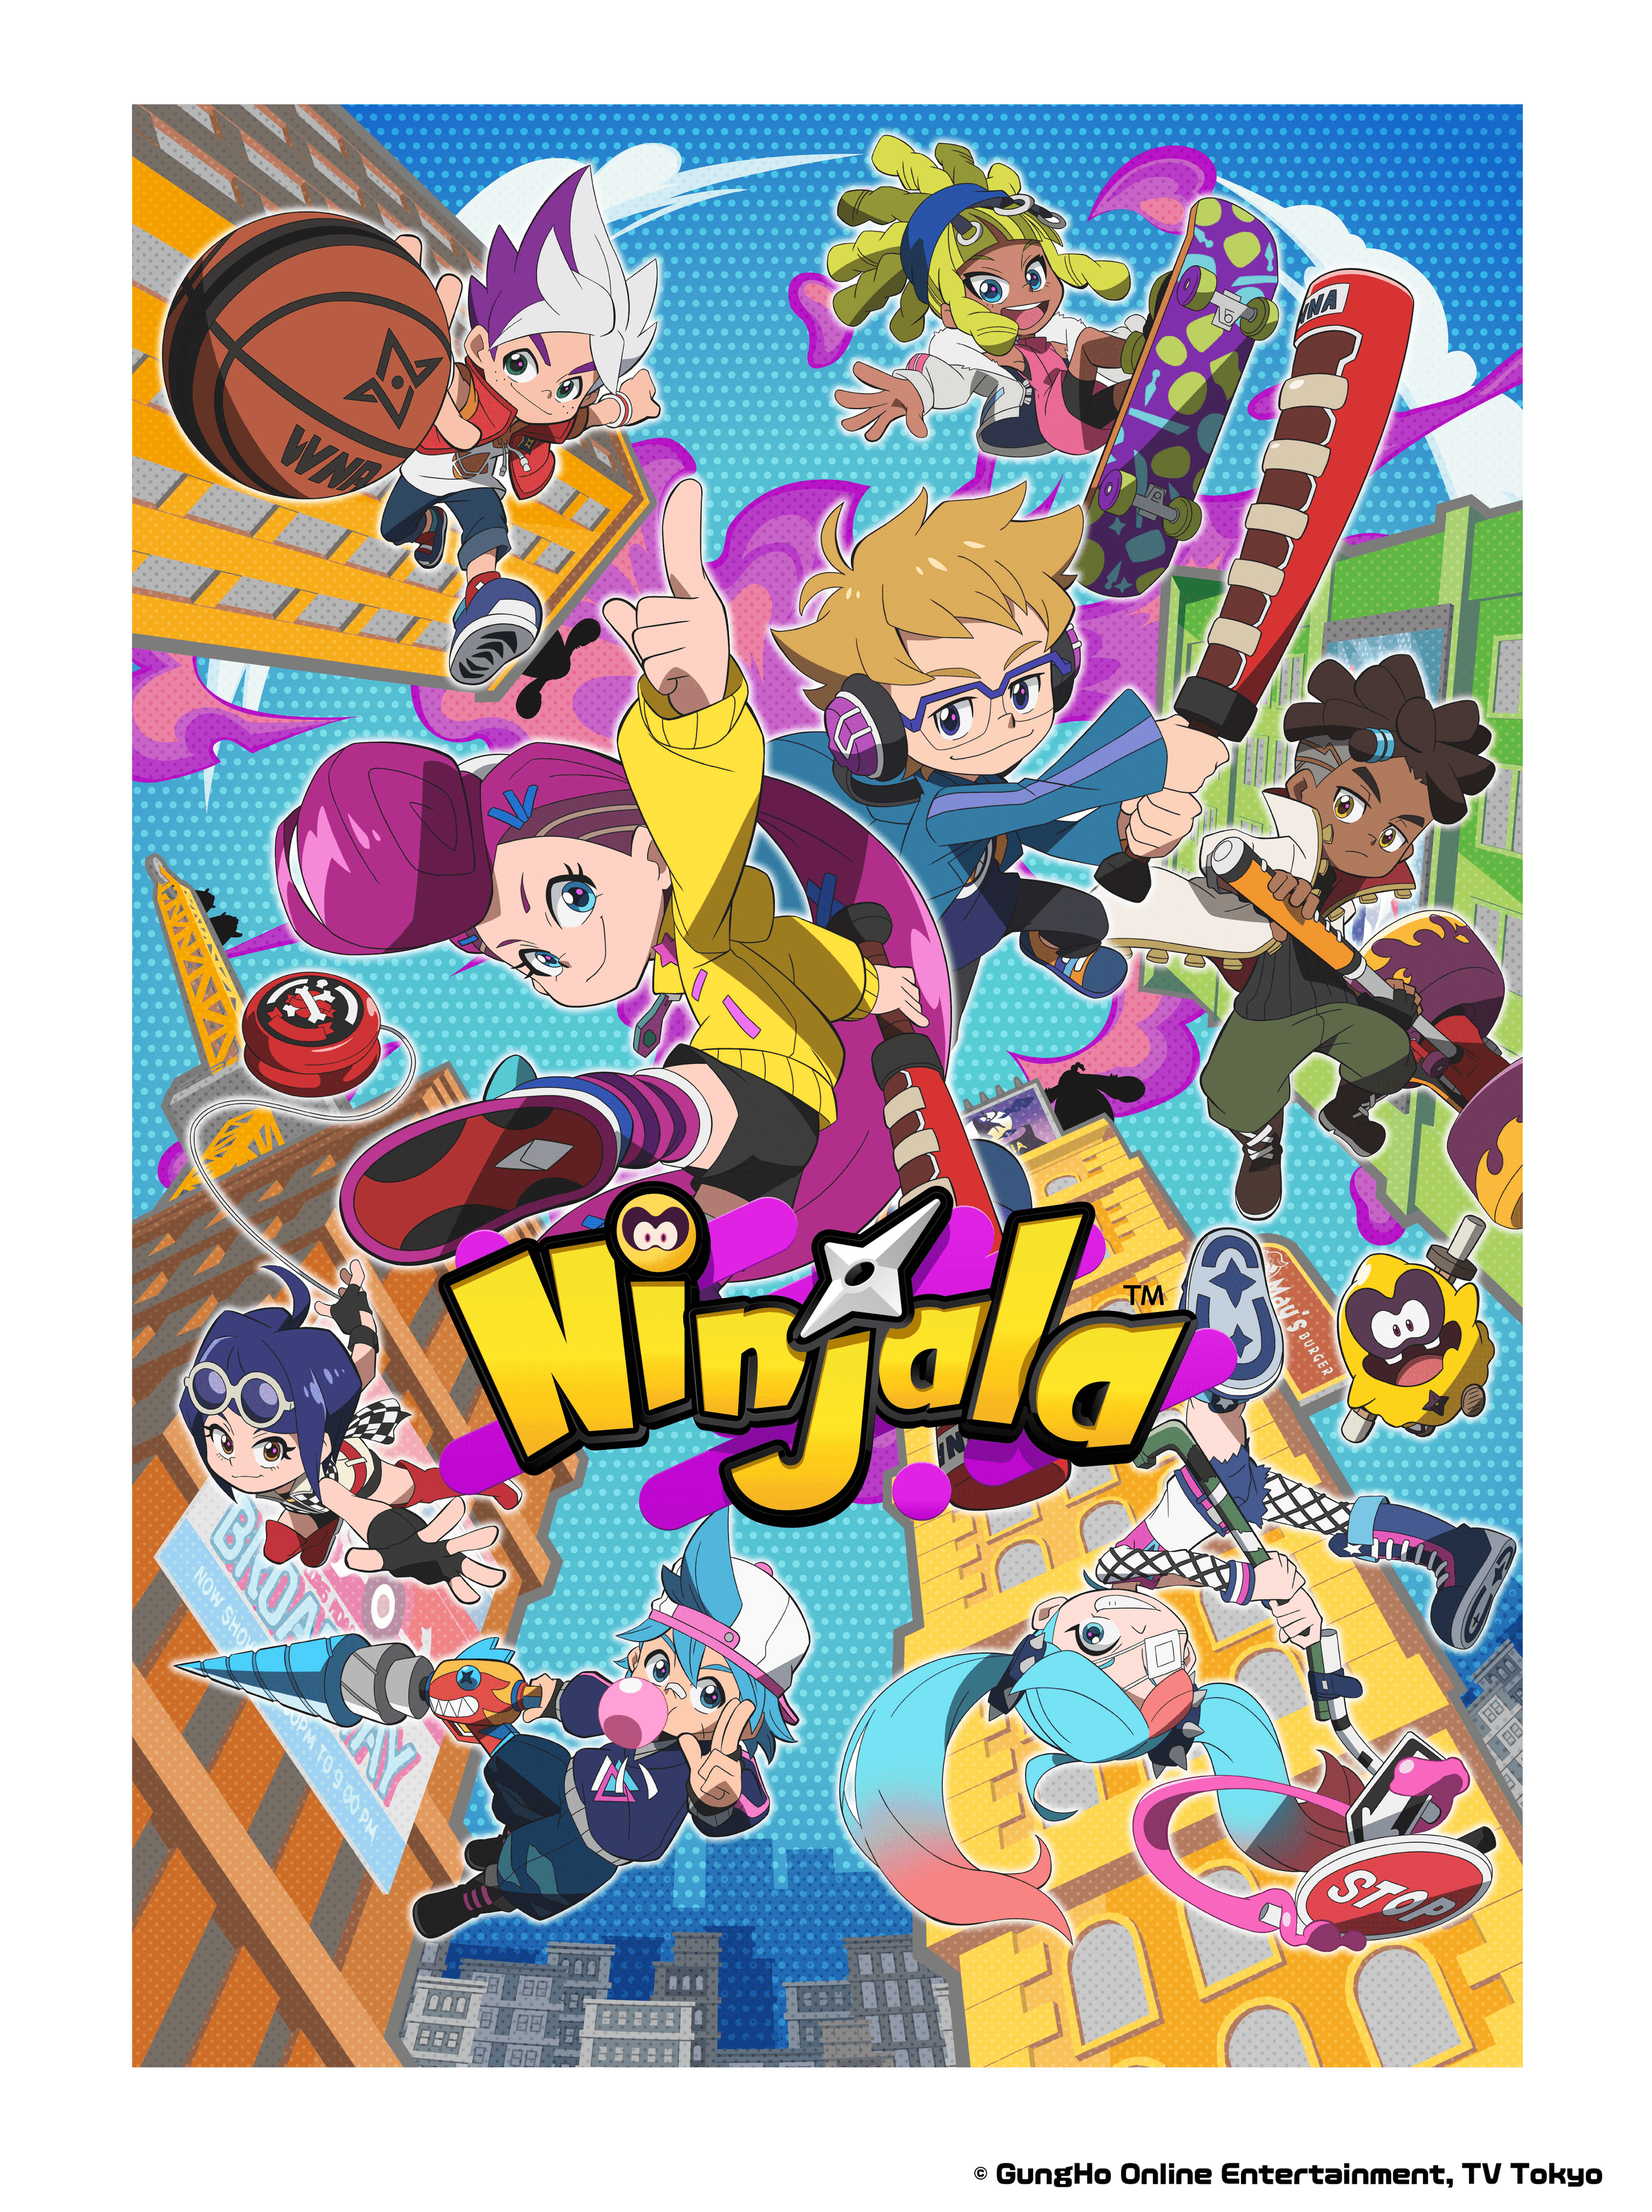 Ninjala's Anime Series Premieres Internationally on Jan. 13th - mxdwn Games